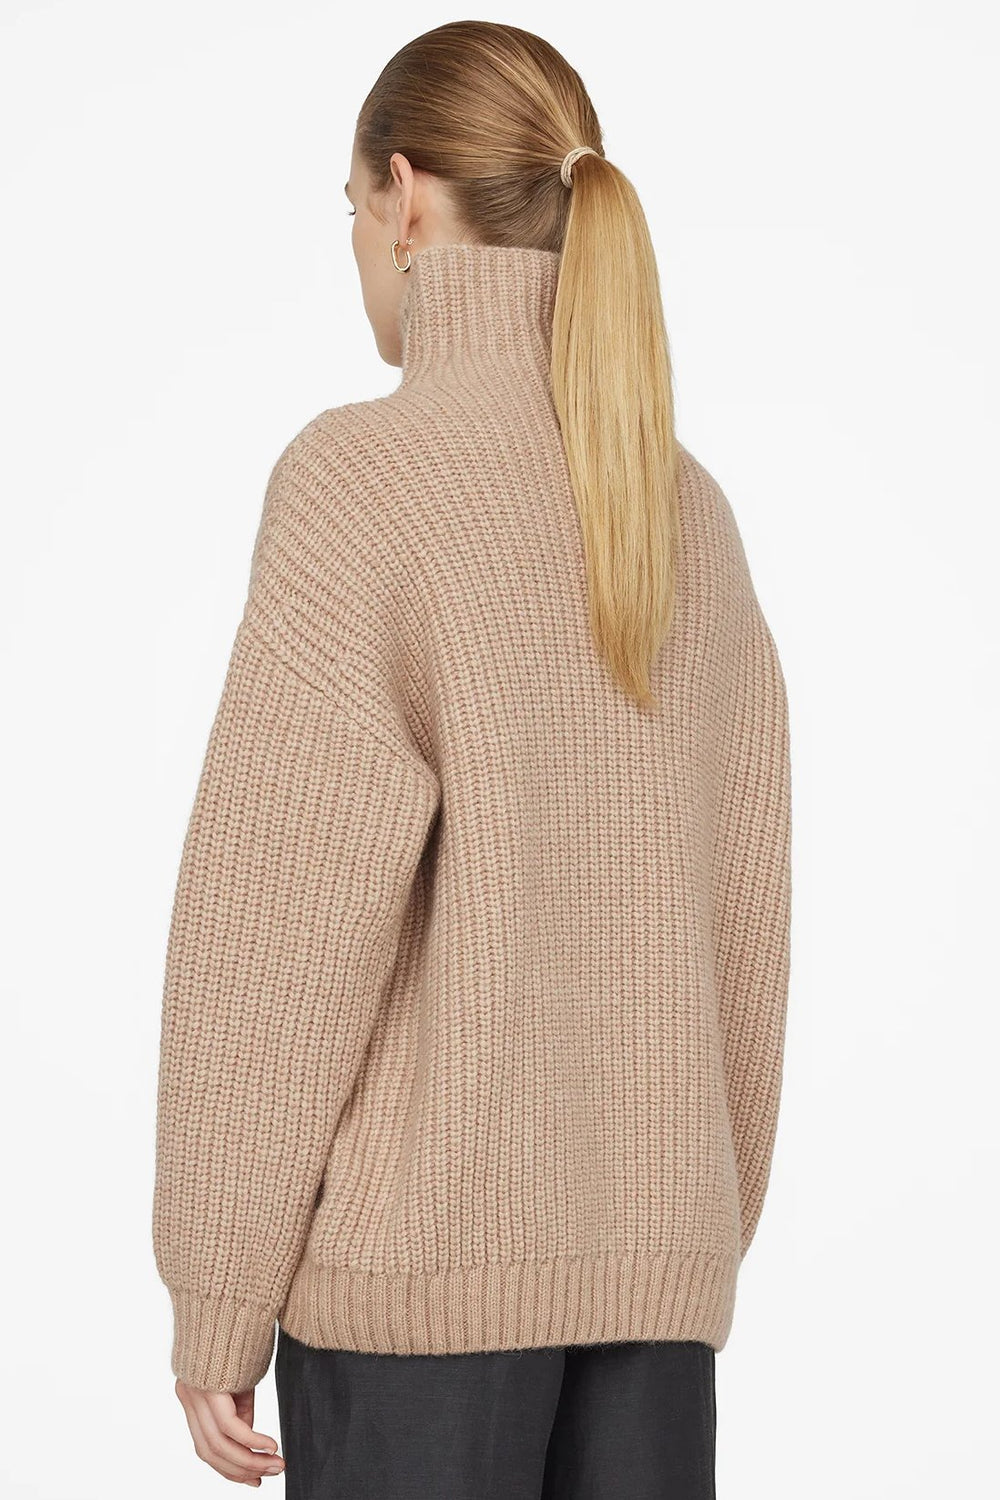 ANINE BING Sydney sweater, camel